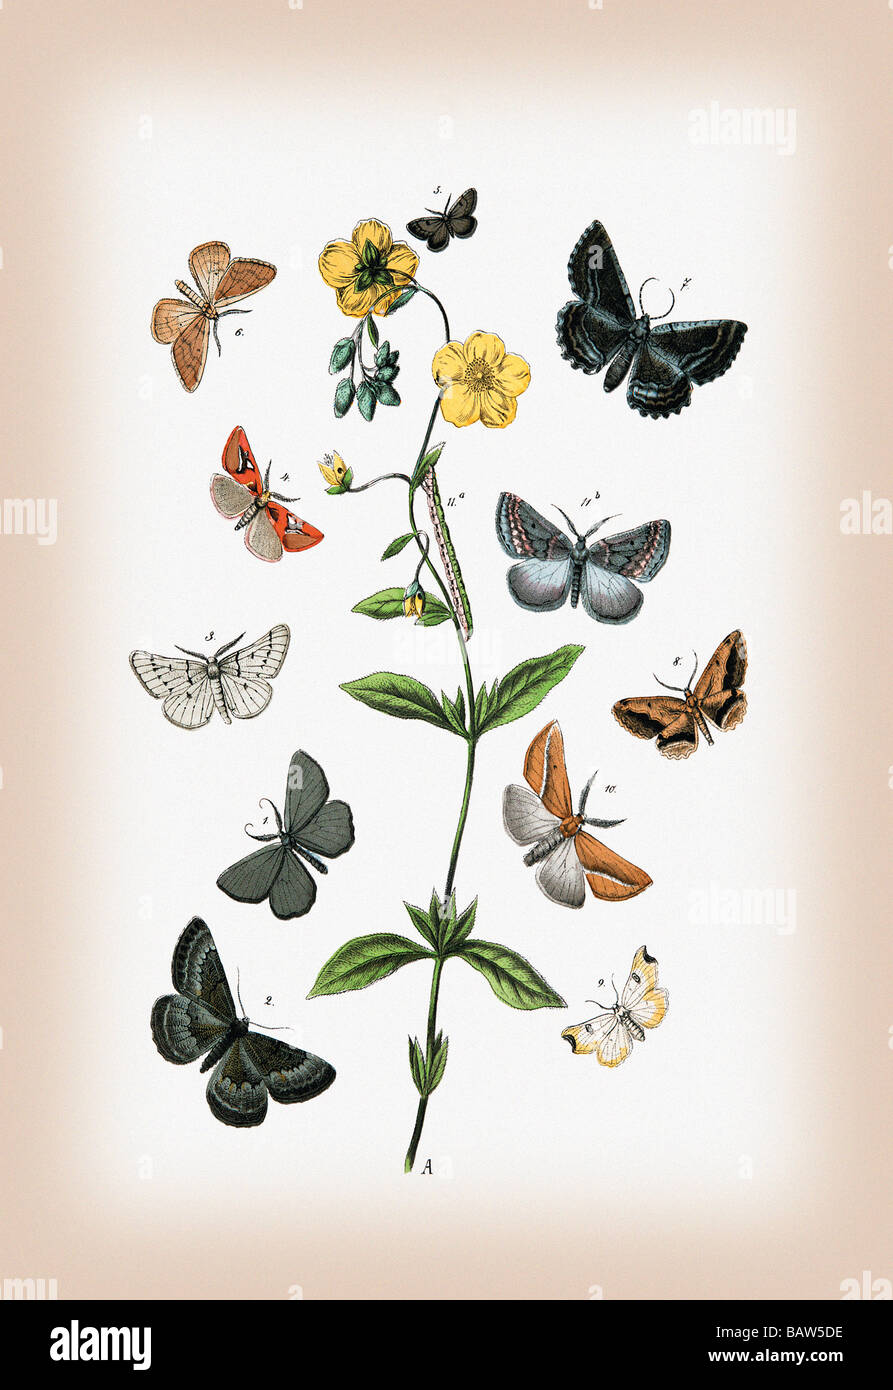 Moths: Cleogene Peletieraria,Chemerina Caliginearia,et al. Stock Photo